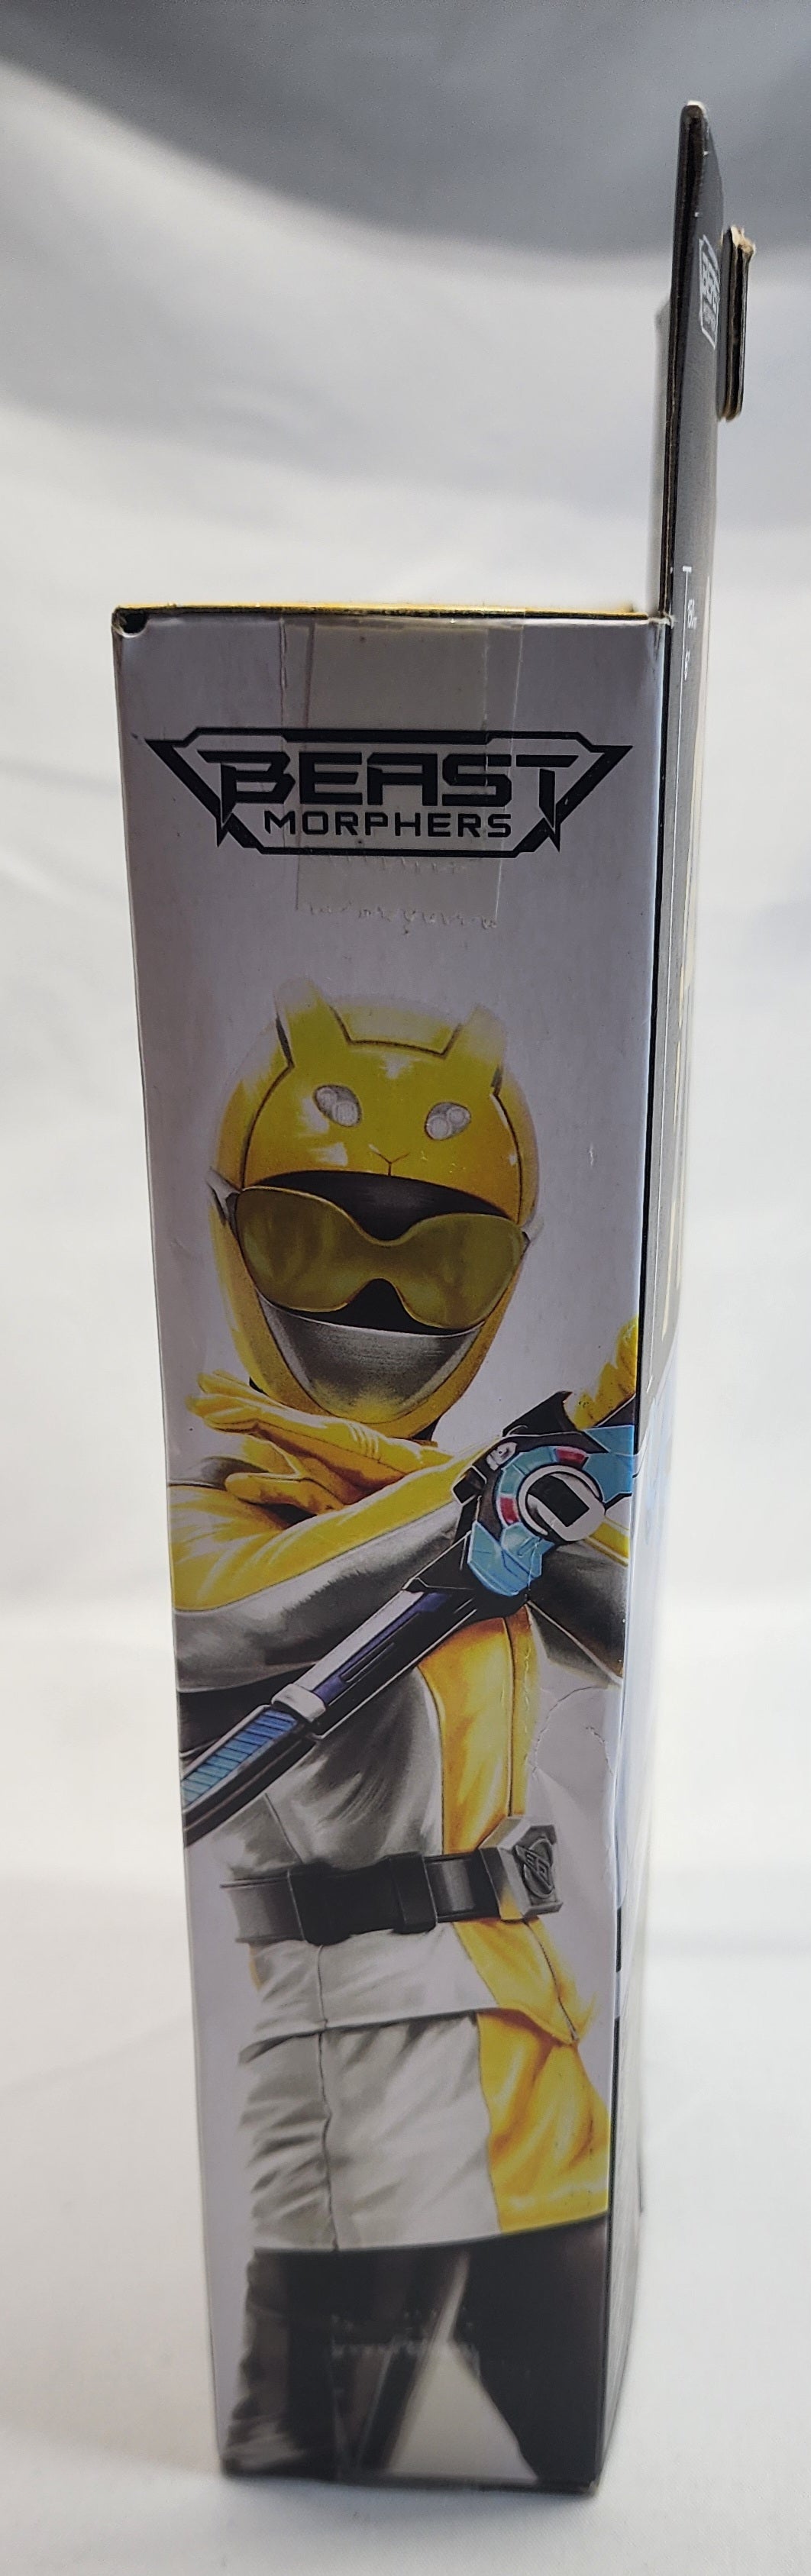 Beast Morphers Yellow Ranger - Power Rangers Lightning Collection Wave 13 Action Figure